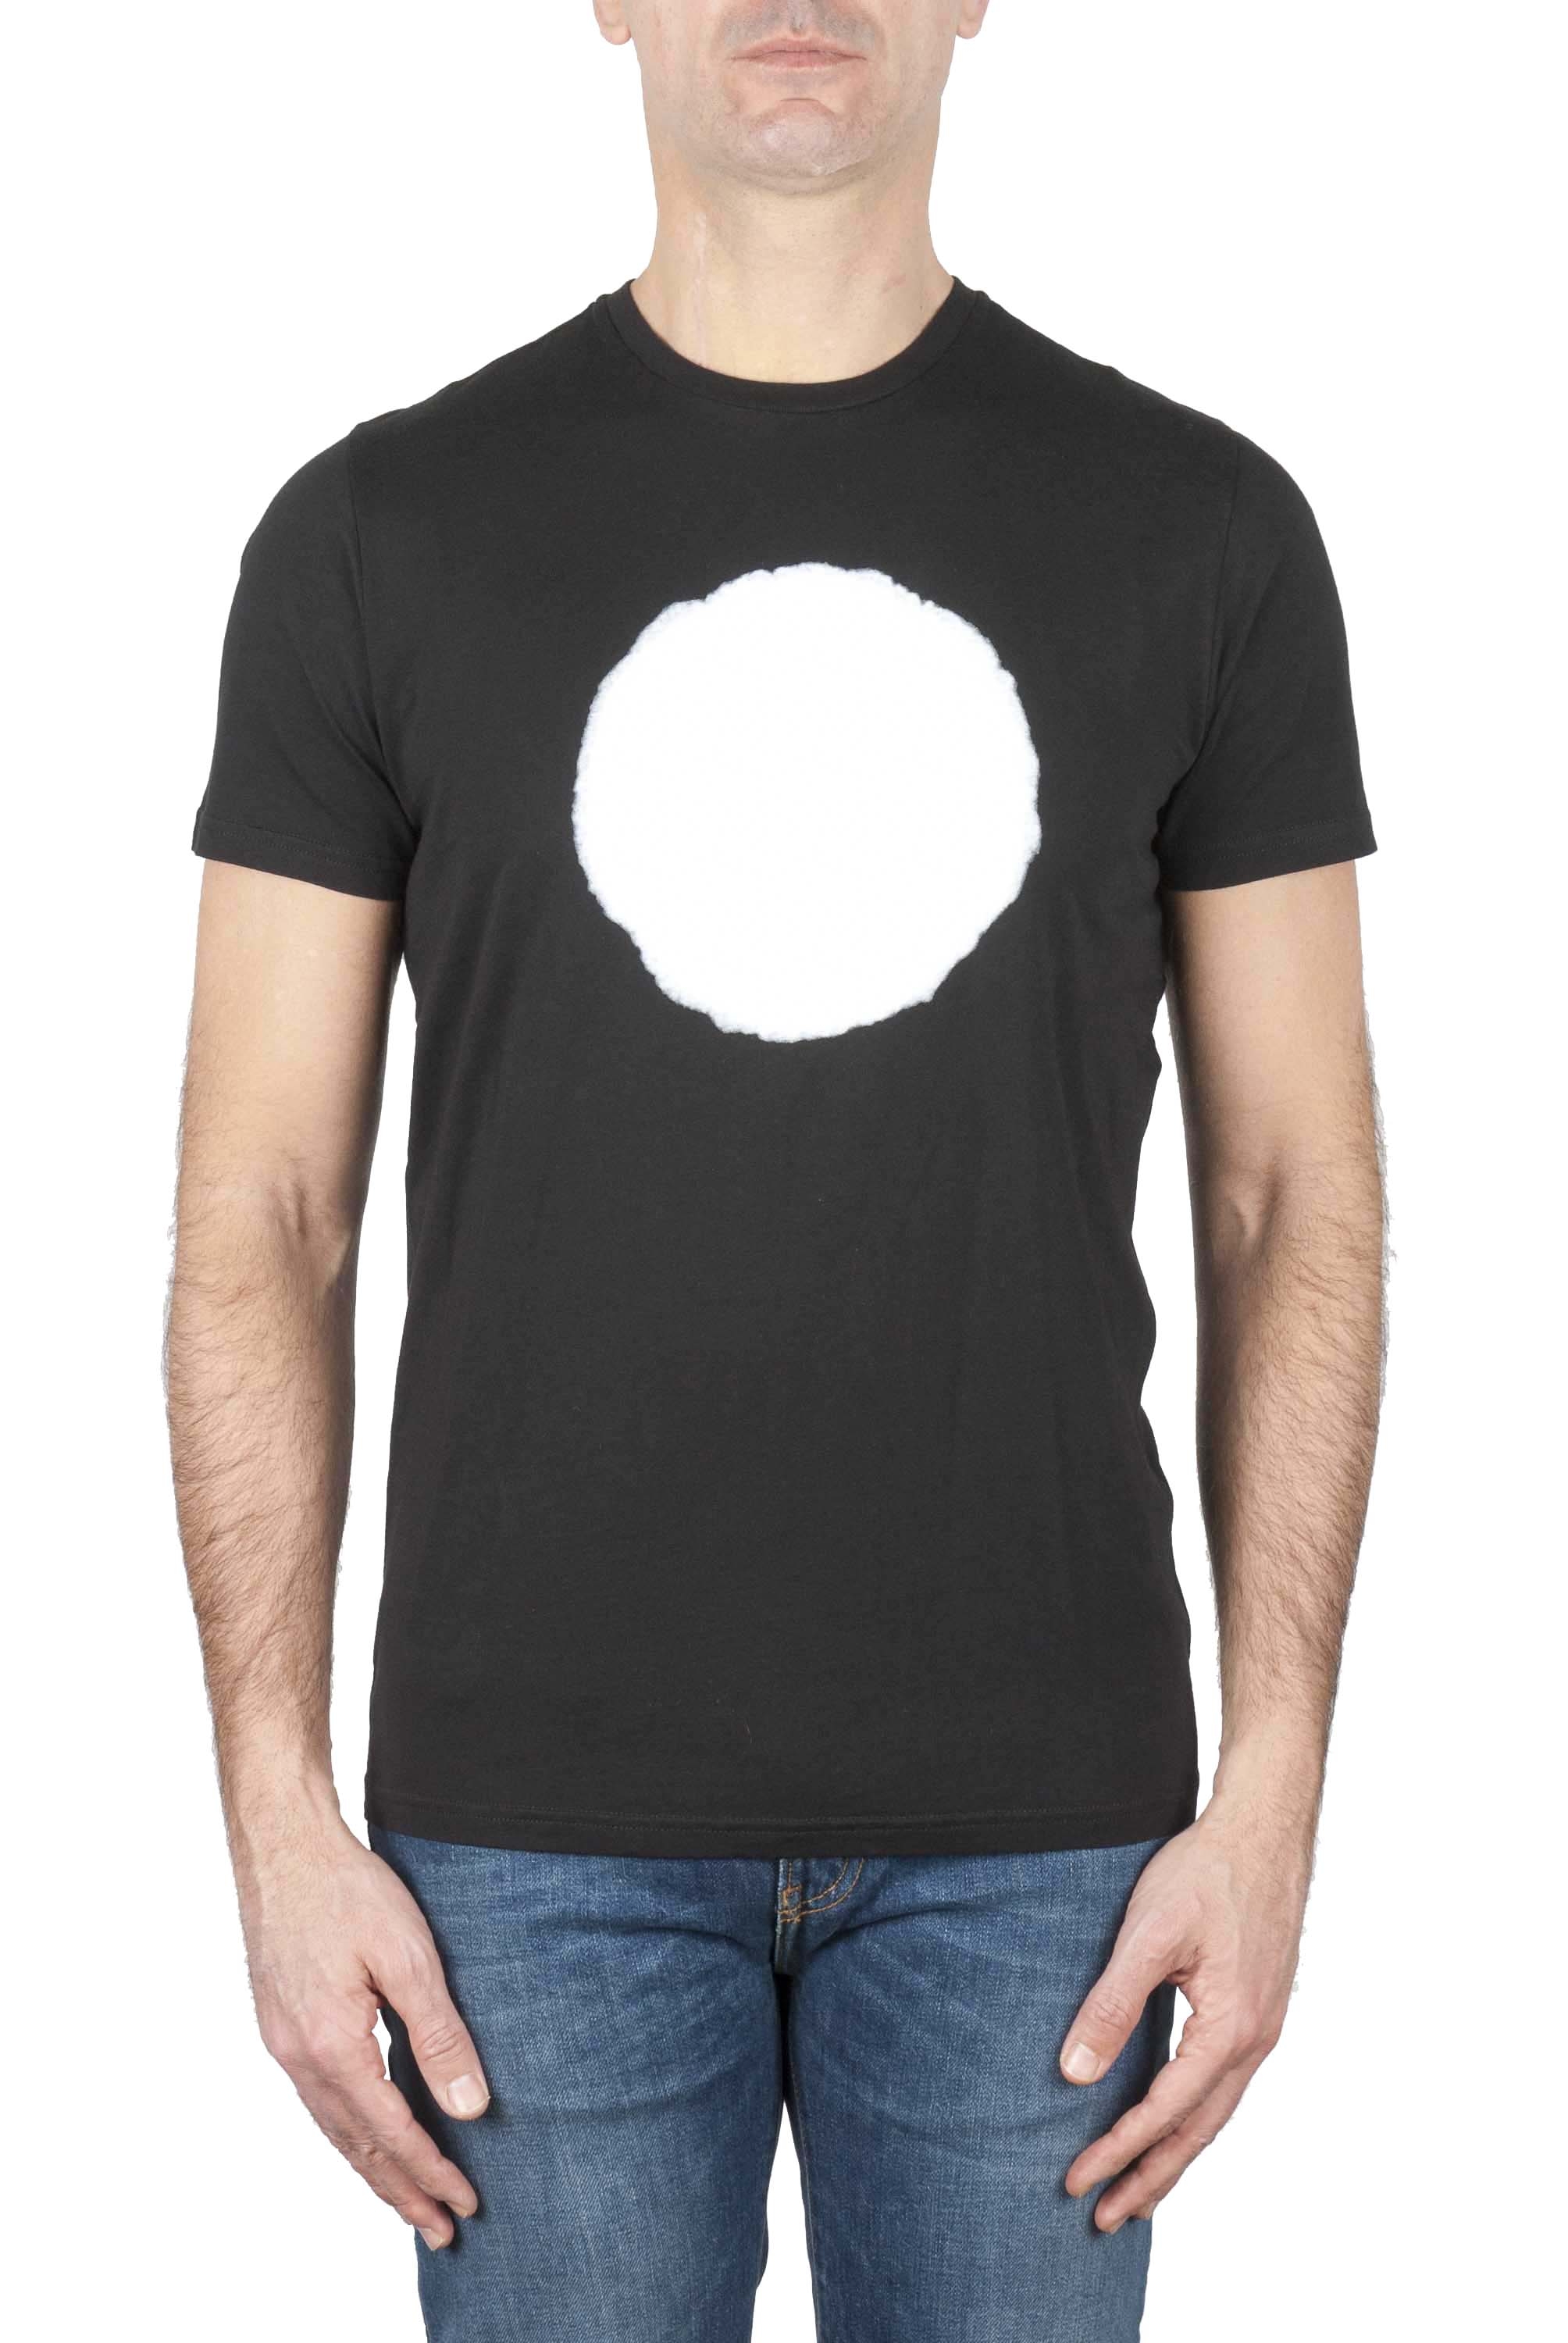 SBU 01166 Classic short sleeve cotton round neck t-shirt white and black printed graphic 01